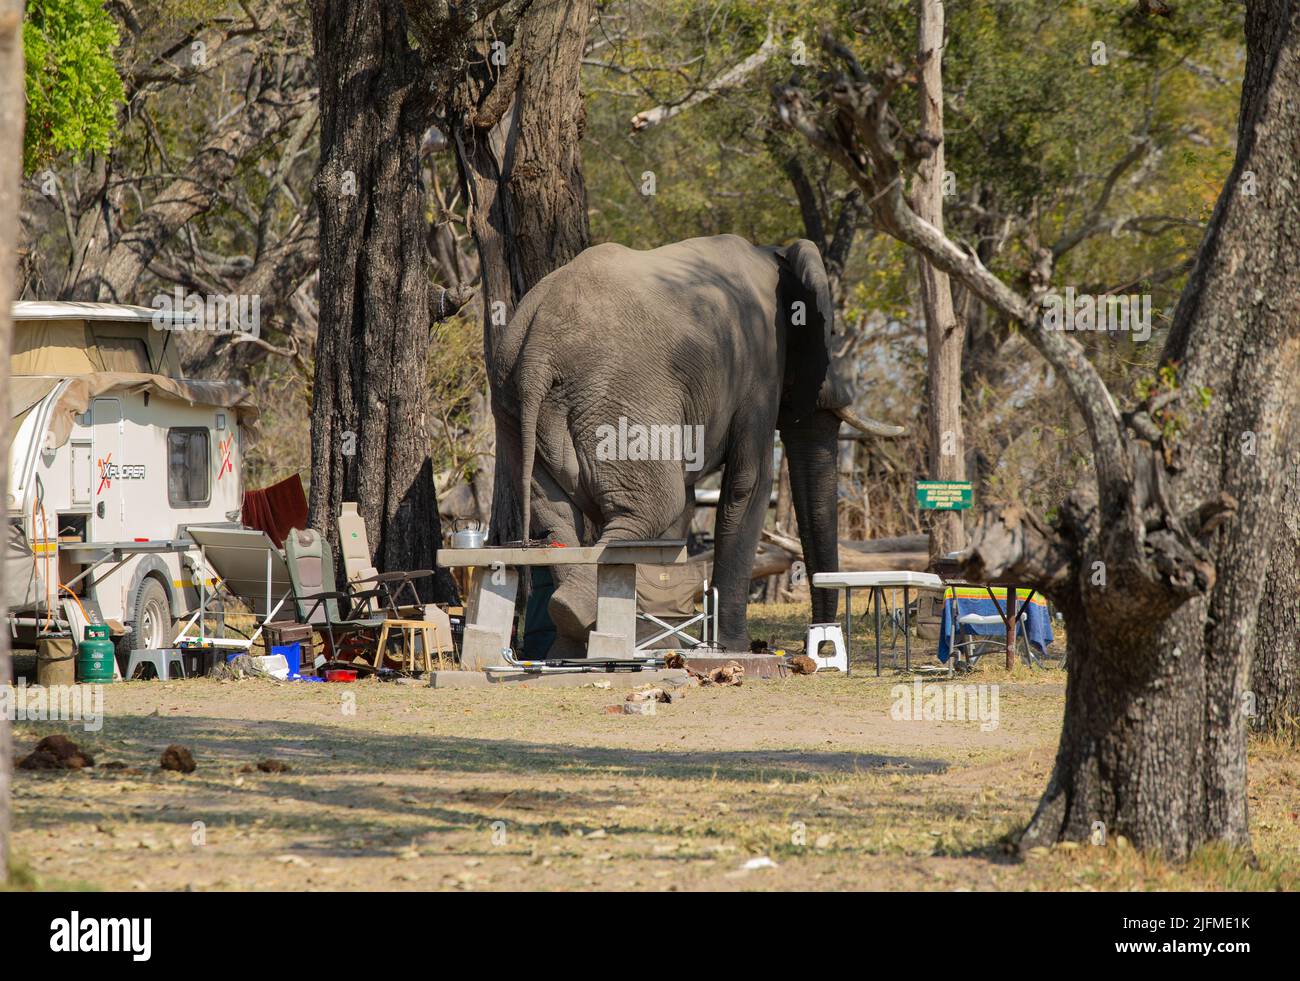 African Elephant (Loxodonta africana) disturbing a tourist campsite Stock Photo